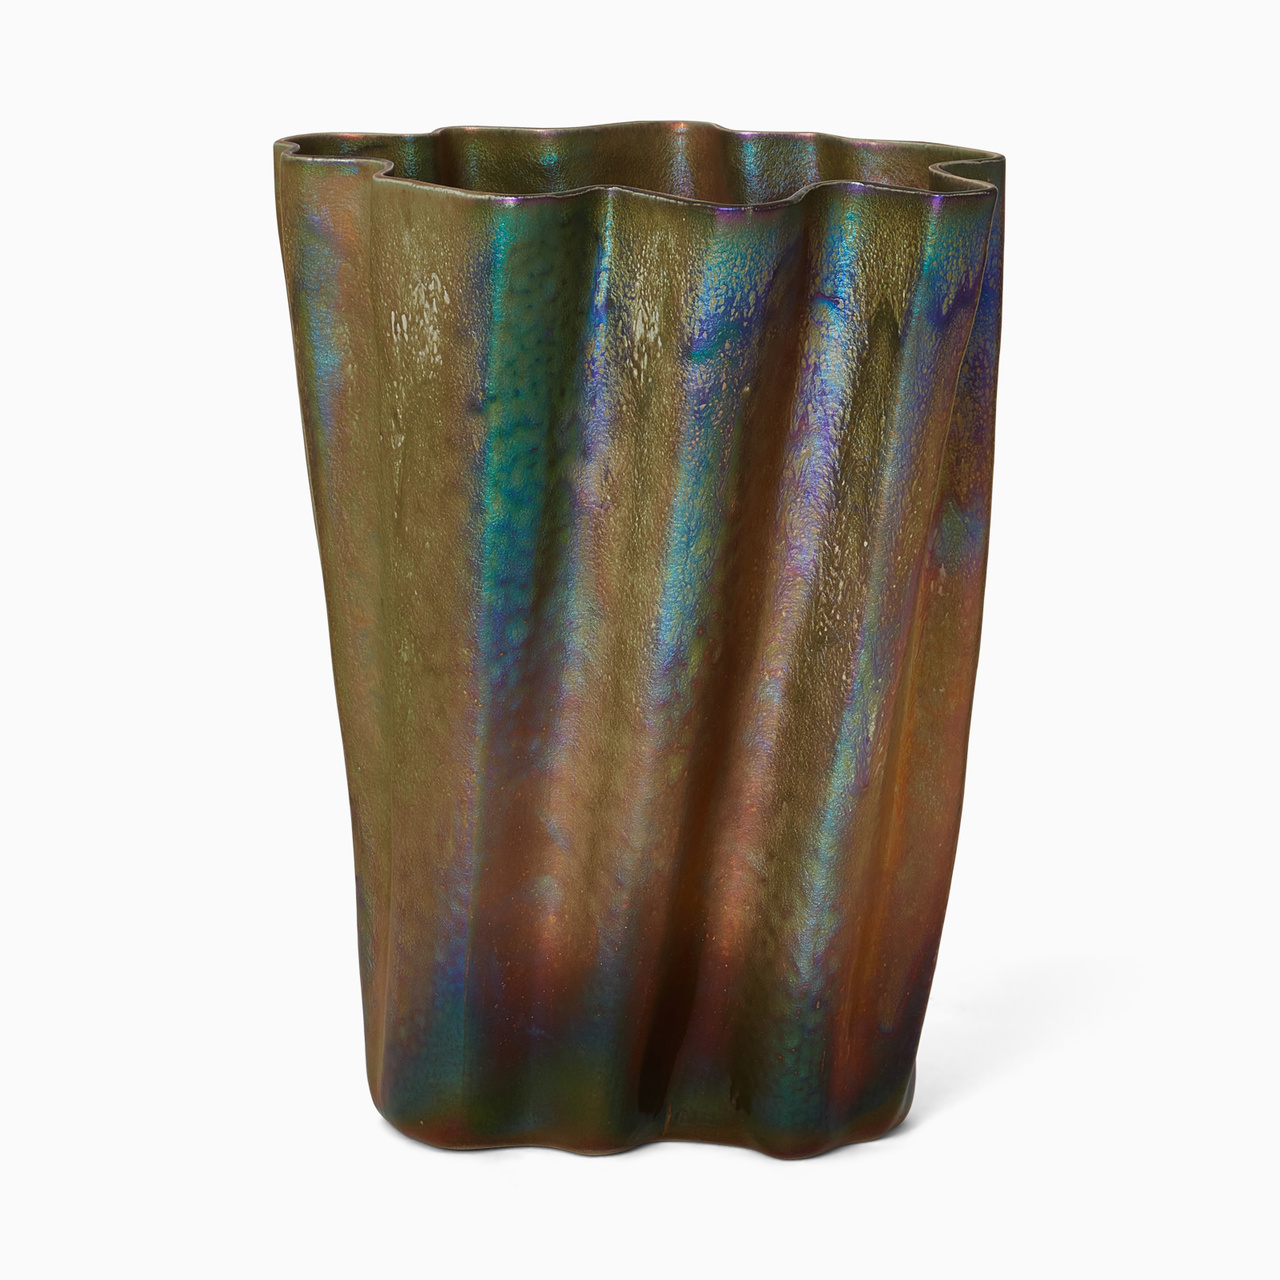 Vas brons glaserad keramik 39,5 cm